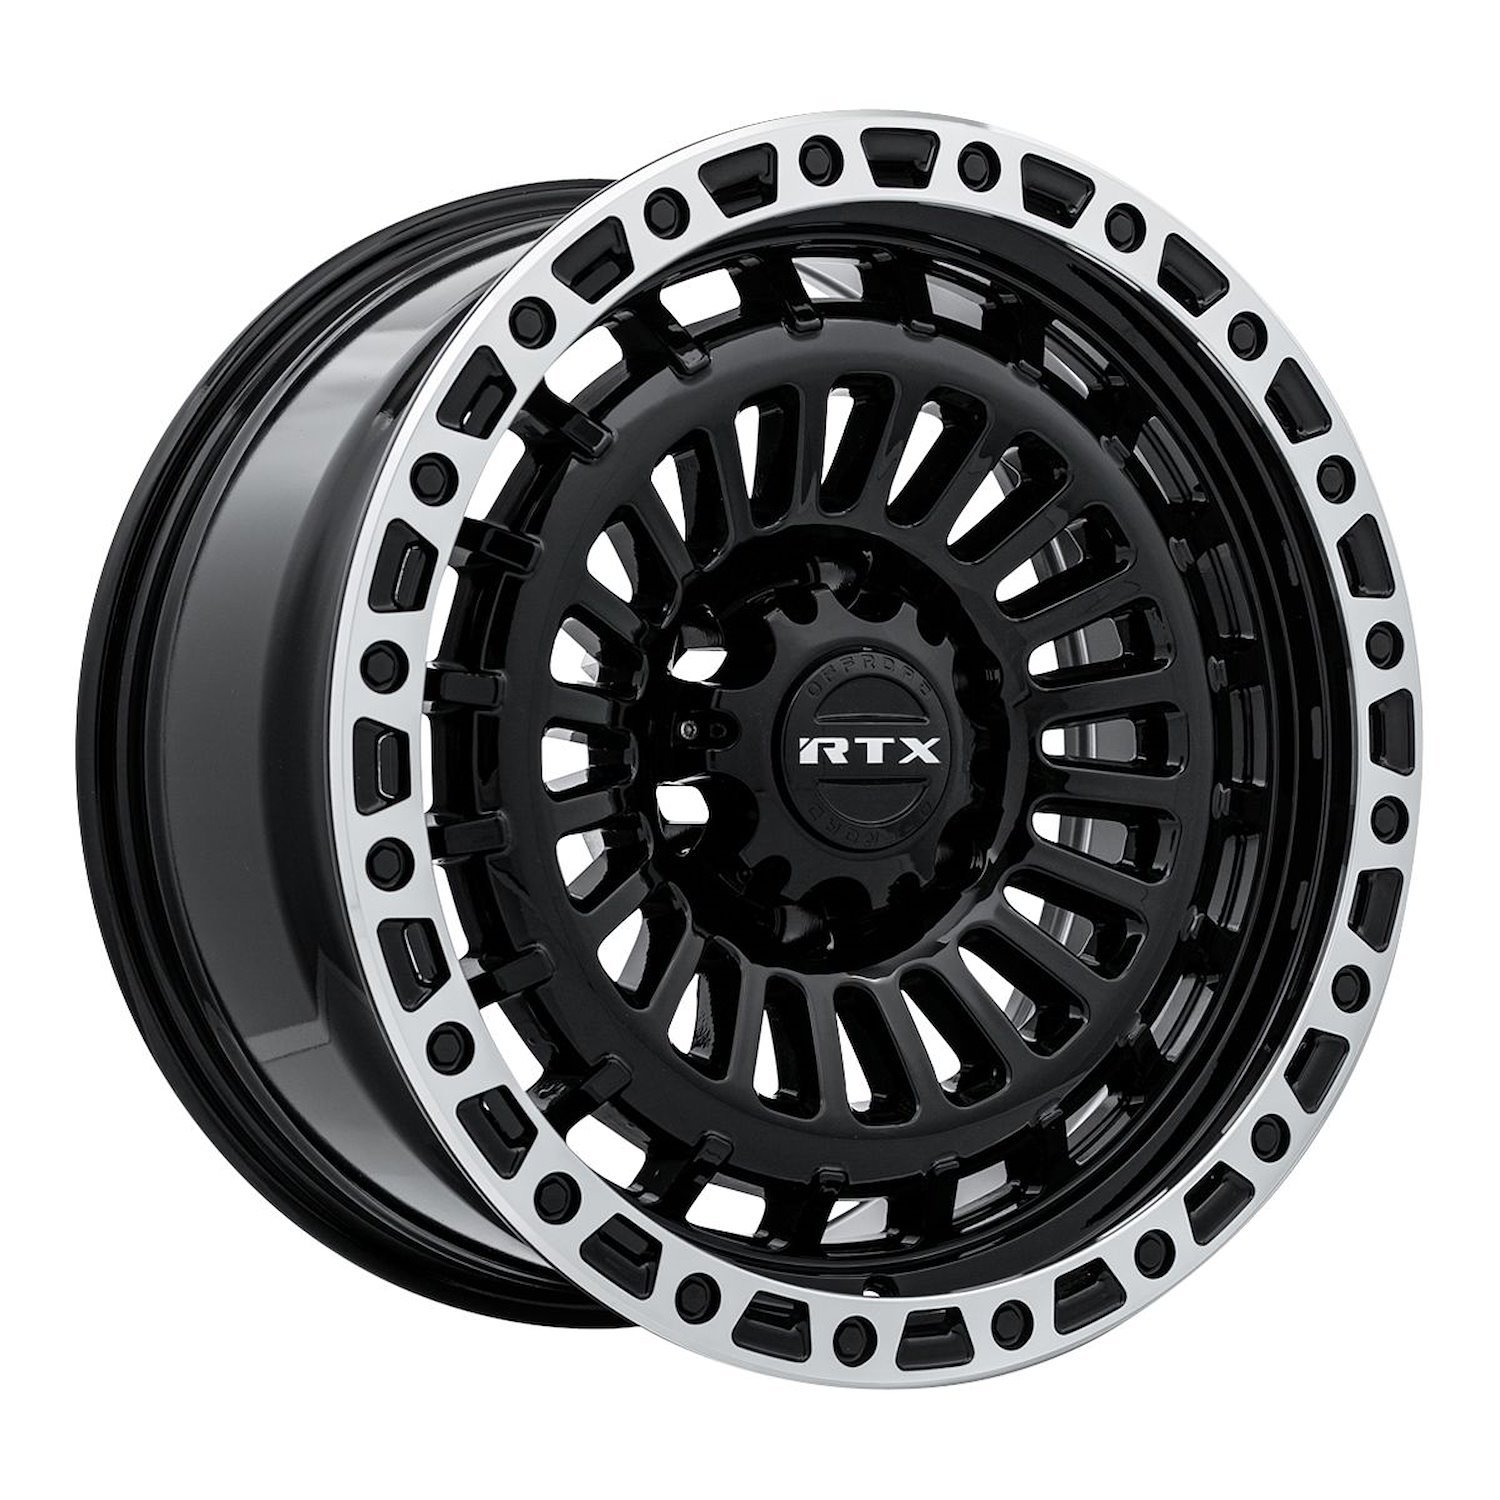 083131 Off-Road Series Moab Wheel [Size: 17" x 9"] Gloss Black Machined Lip Finish